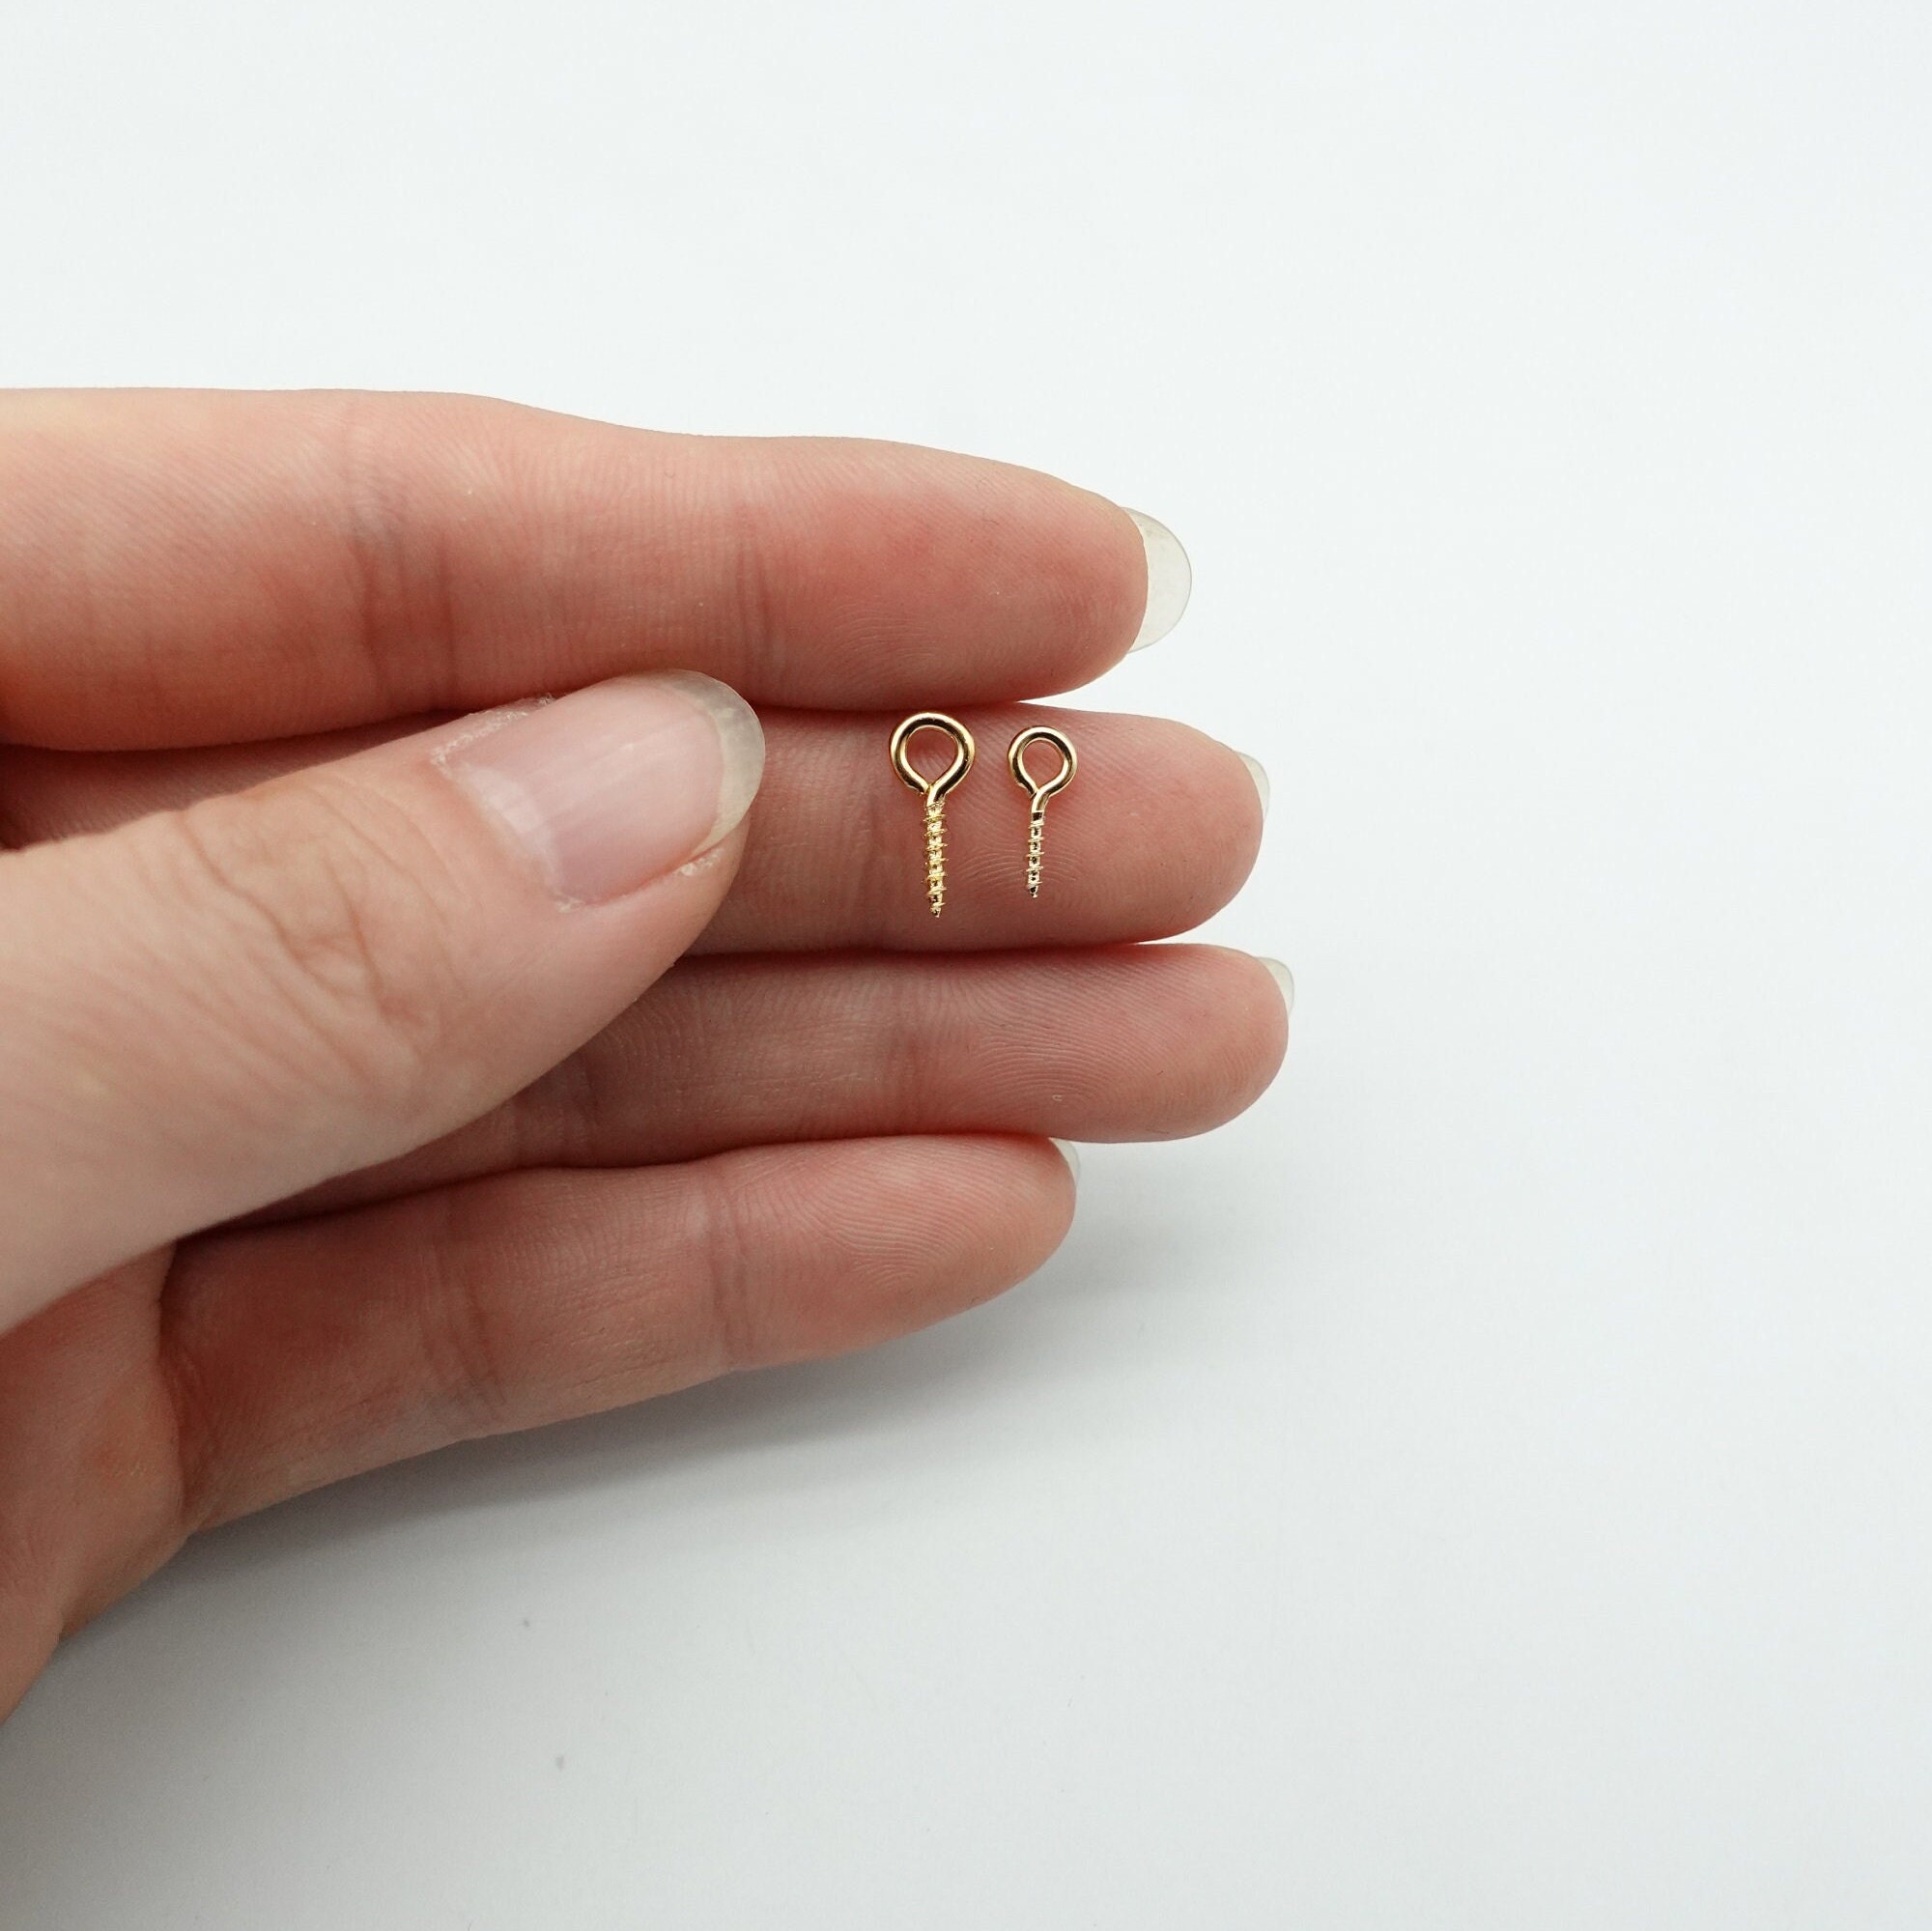 LLMSIX 300 Pieces Eye Hooks Screw Mini Metal Eye Pins for Jewelry